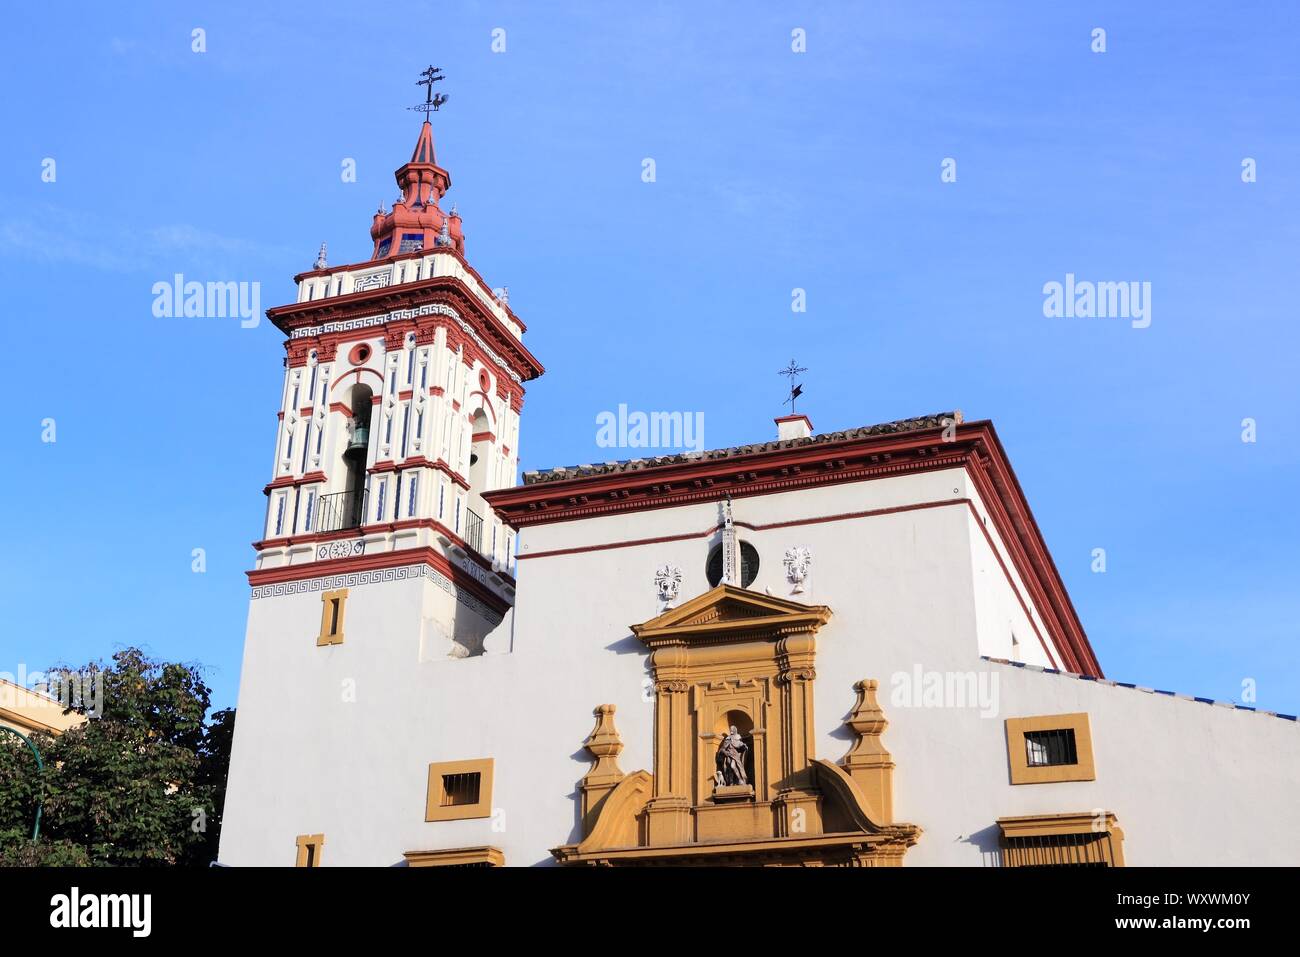 Seville, Spain - church of Saint Roch (Iglesia de San Roque). Stock Photo